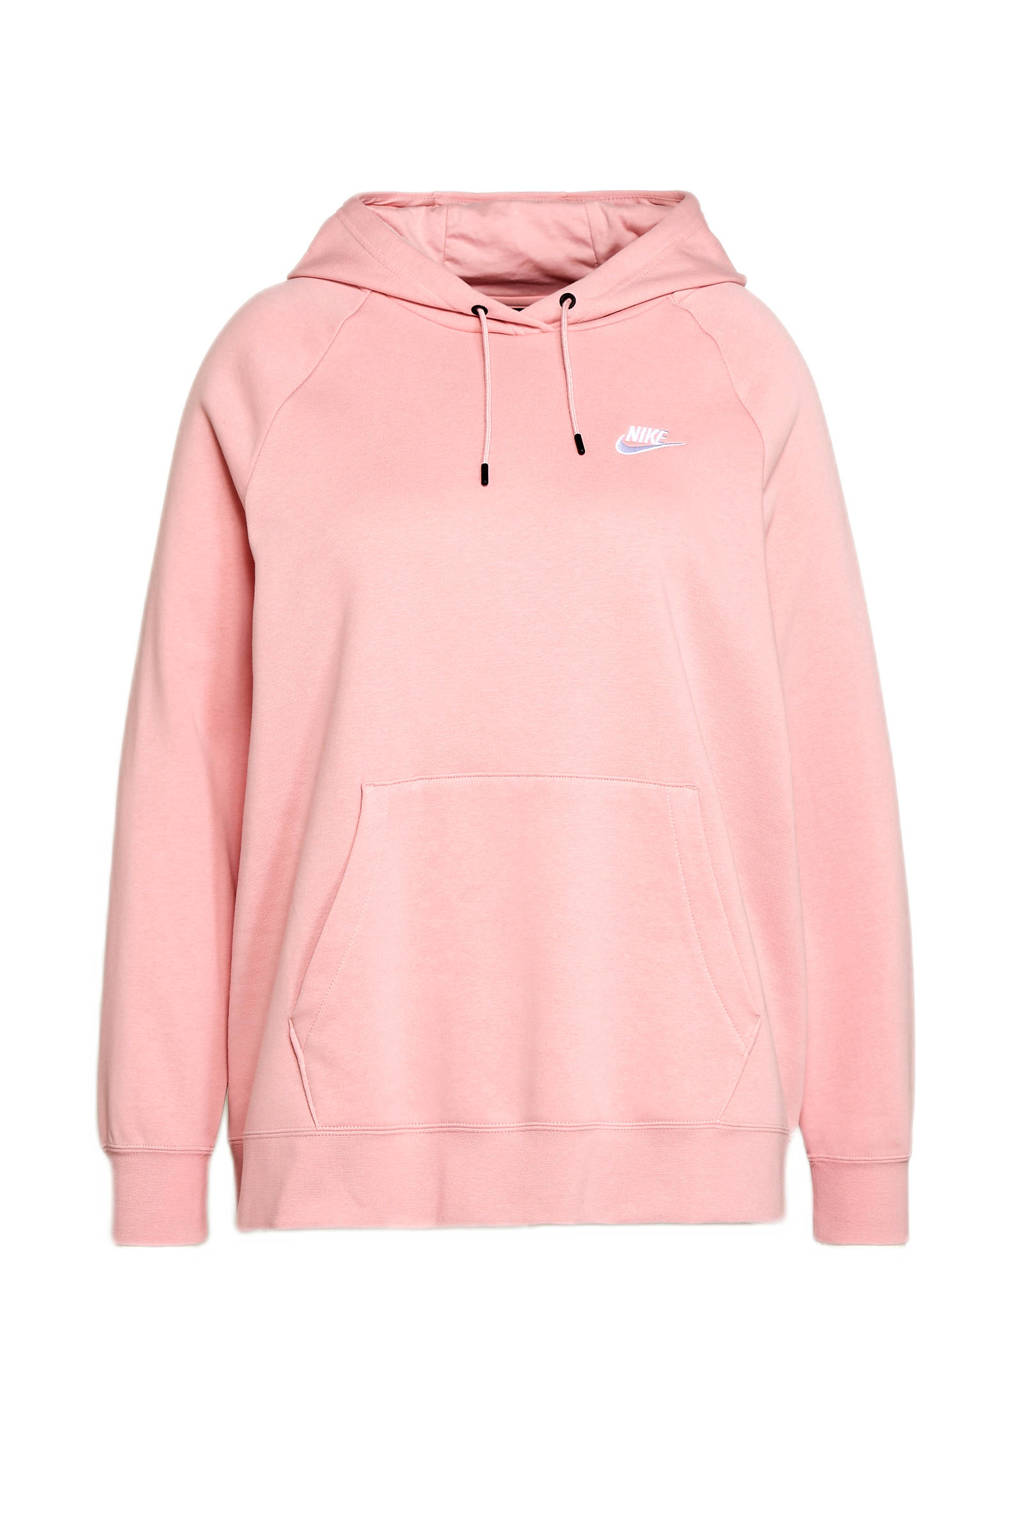 Nike Plus Size hoodie roze/wit, Roze/wit